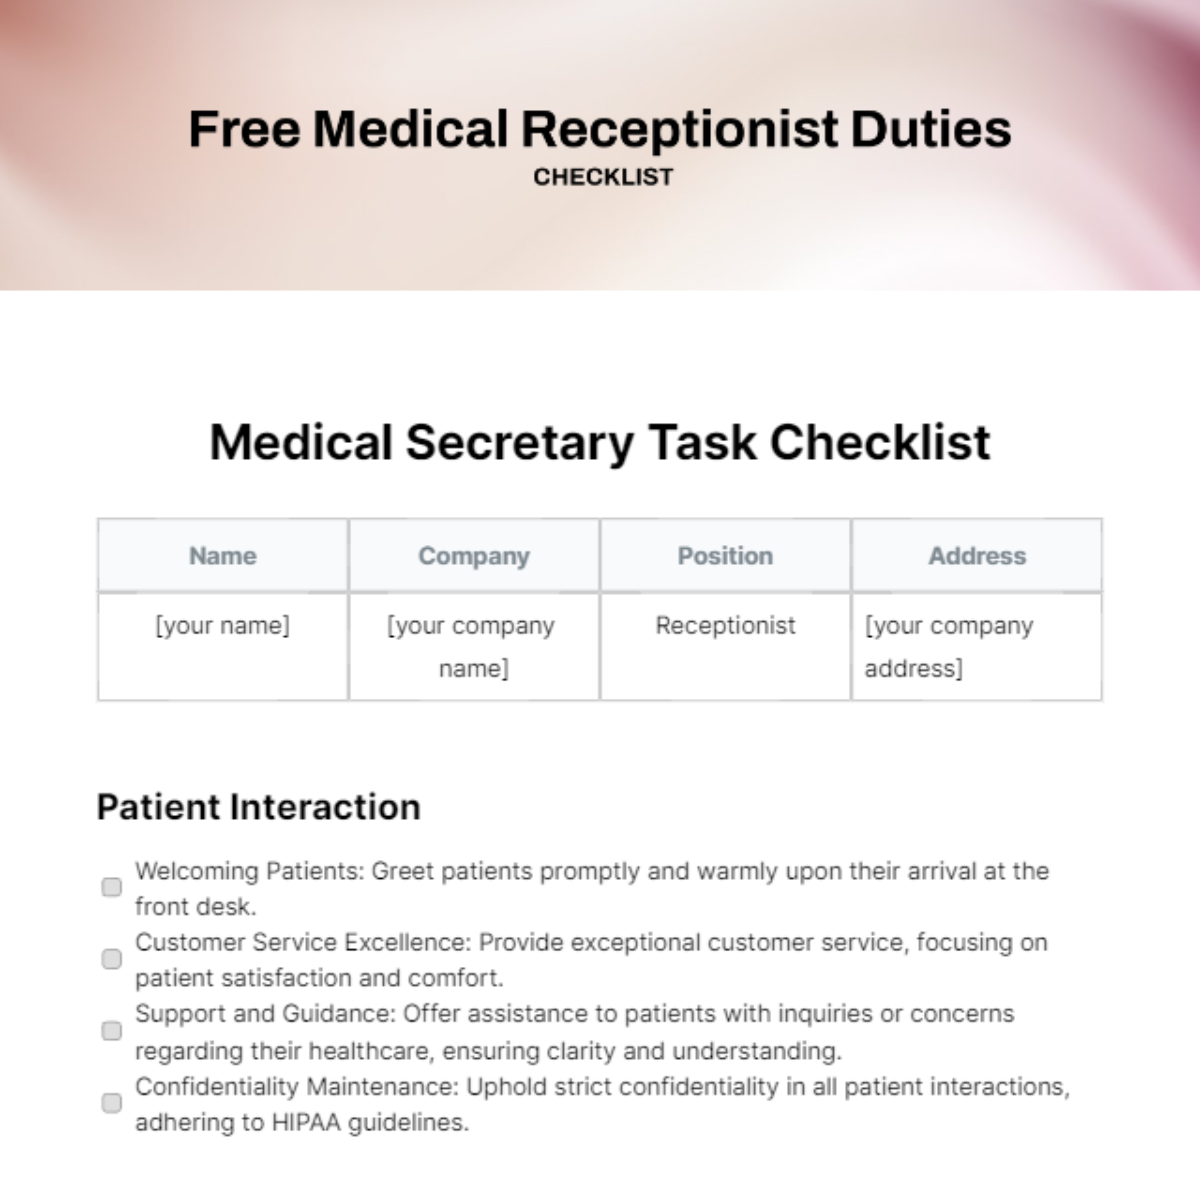 Medical Receptionist Duties Checklist Template